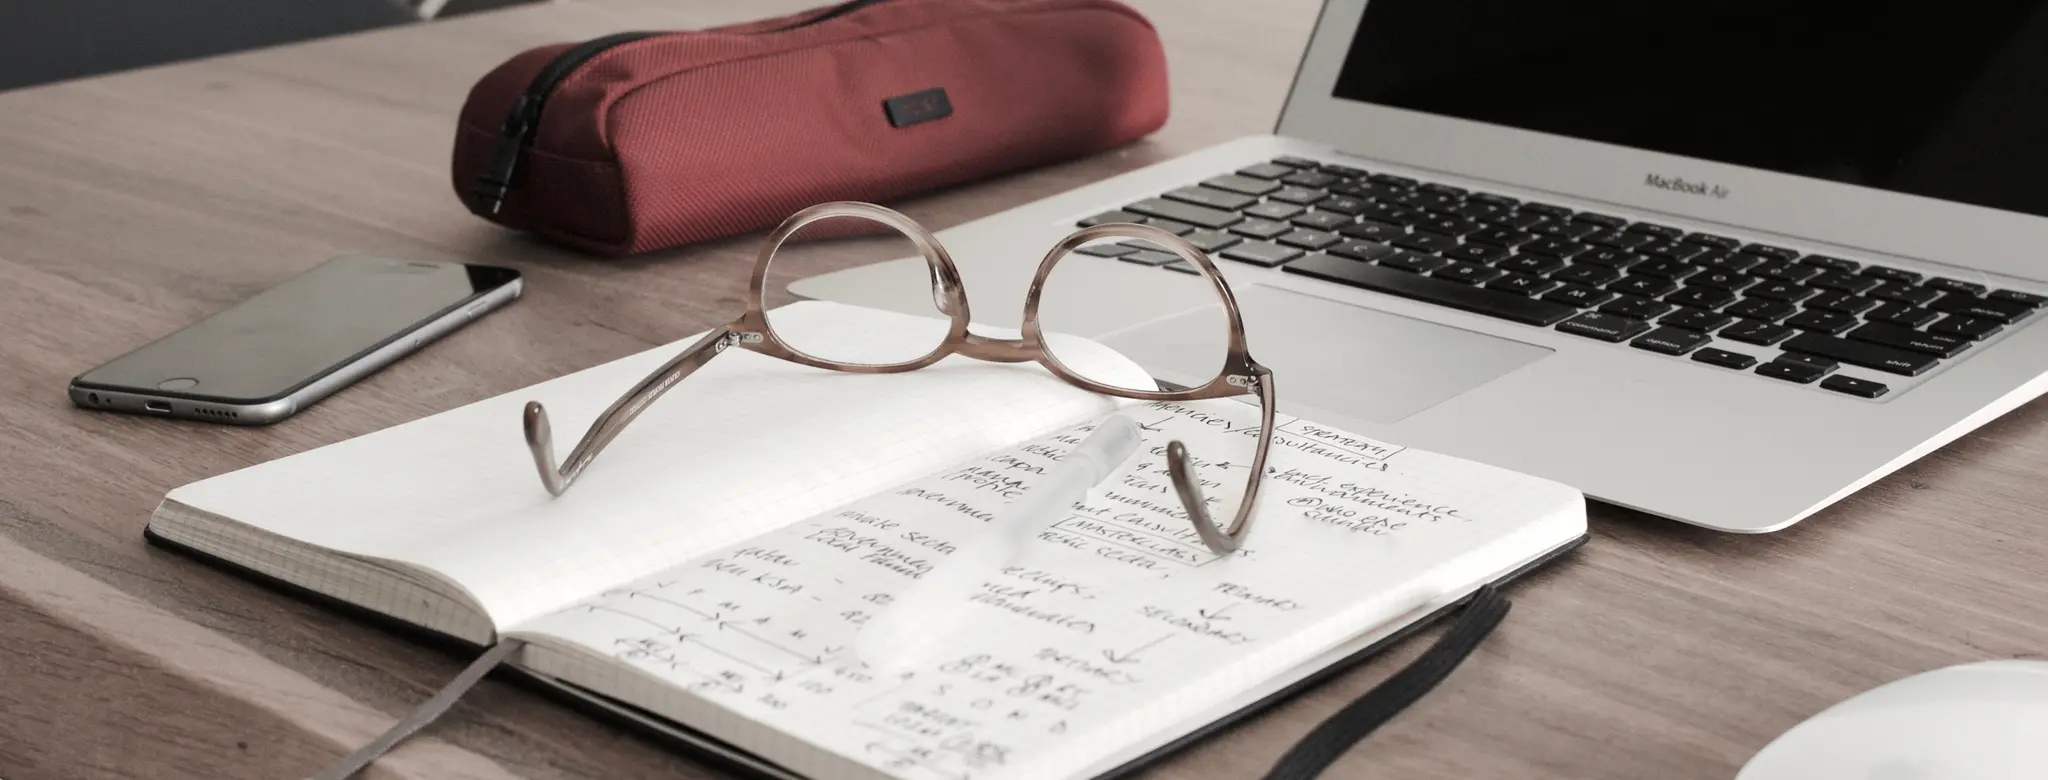 laptop notebook glasses on desk